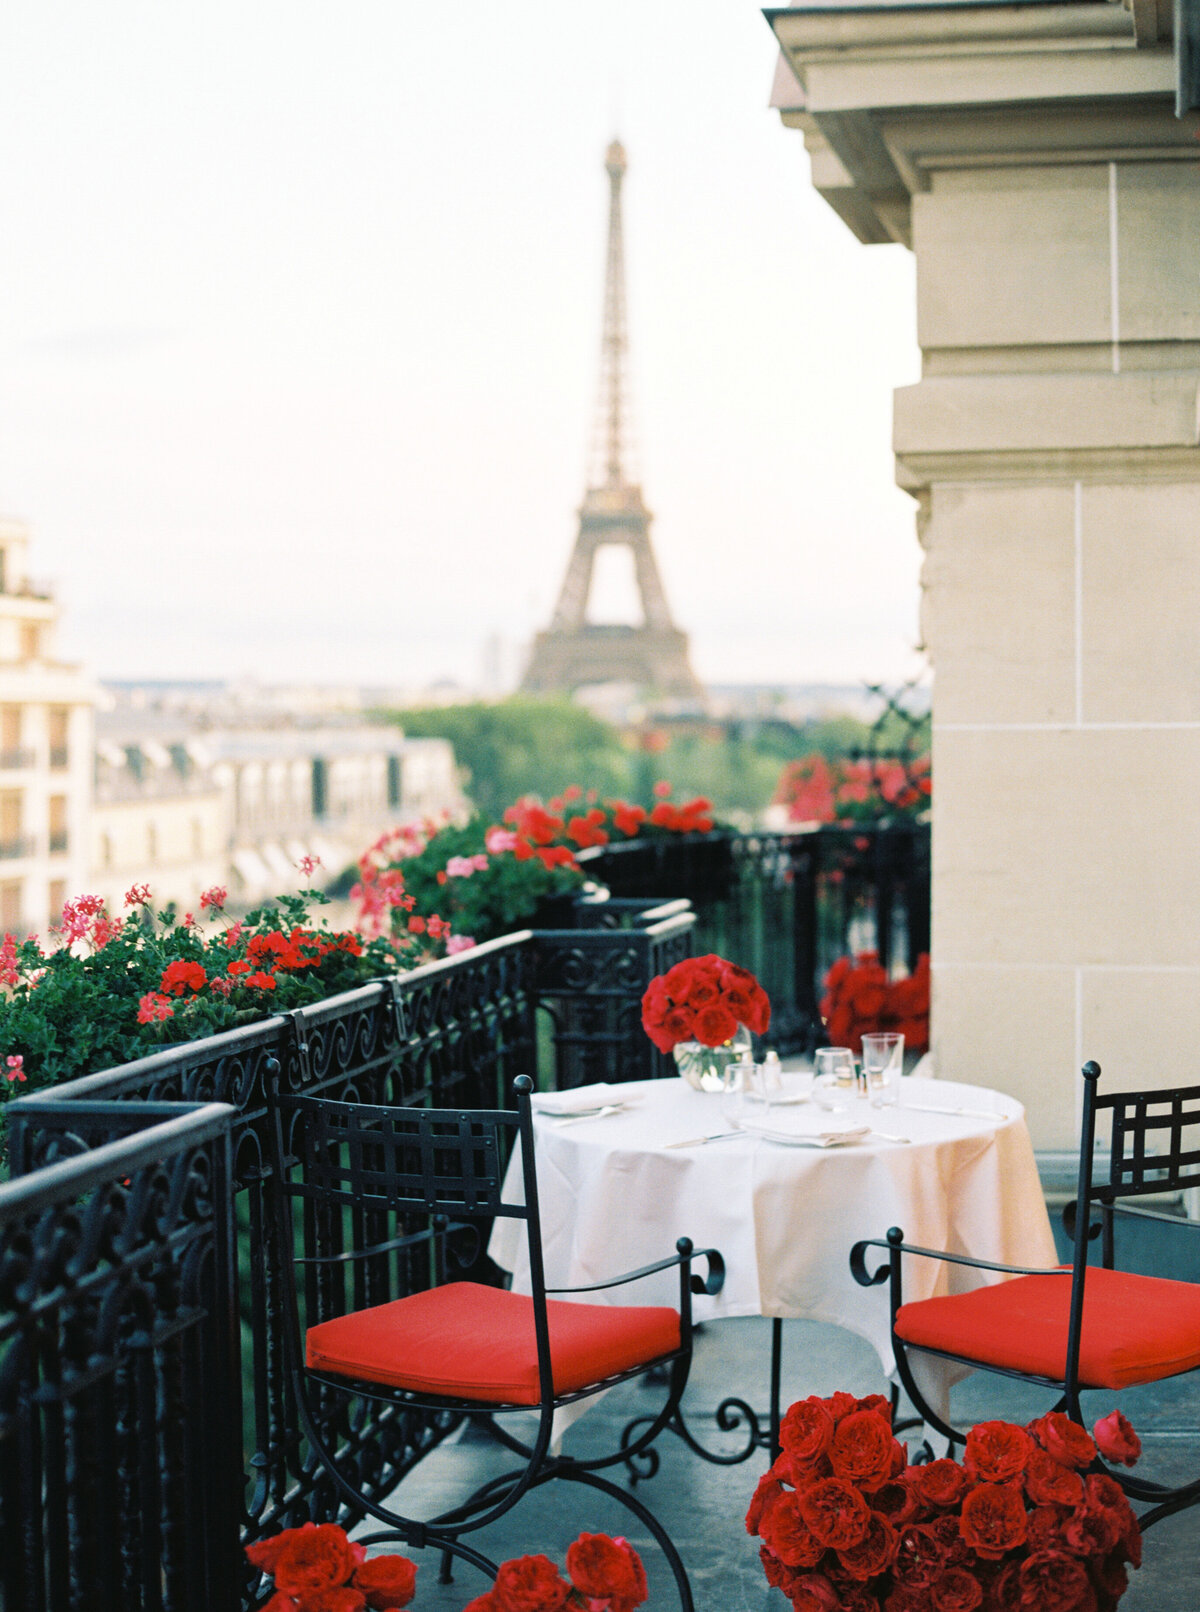 Plaza Athenee Paris Elopement Balcony Eiffel Tower View- Janna Brown Photography